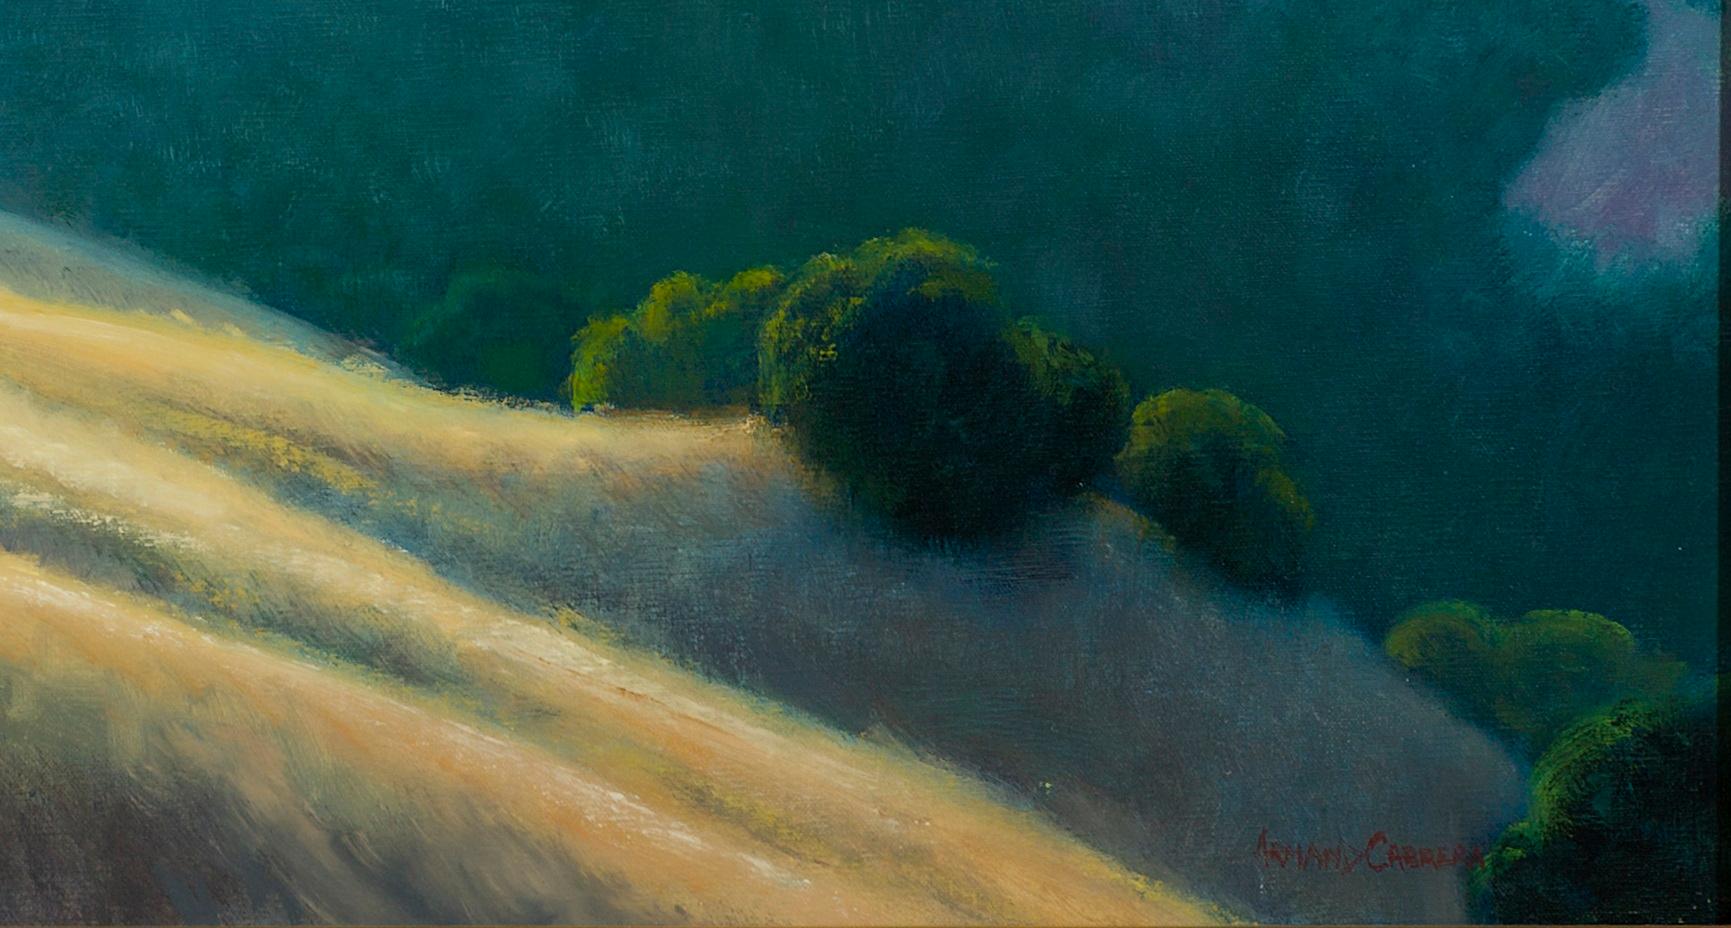 Central American Lifting Fog, Californian Landscape, Armand Cabrera Oil on Canvas